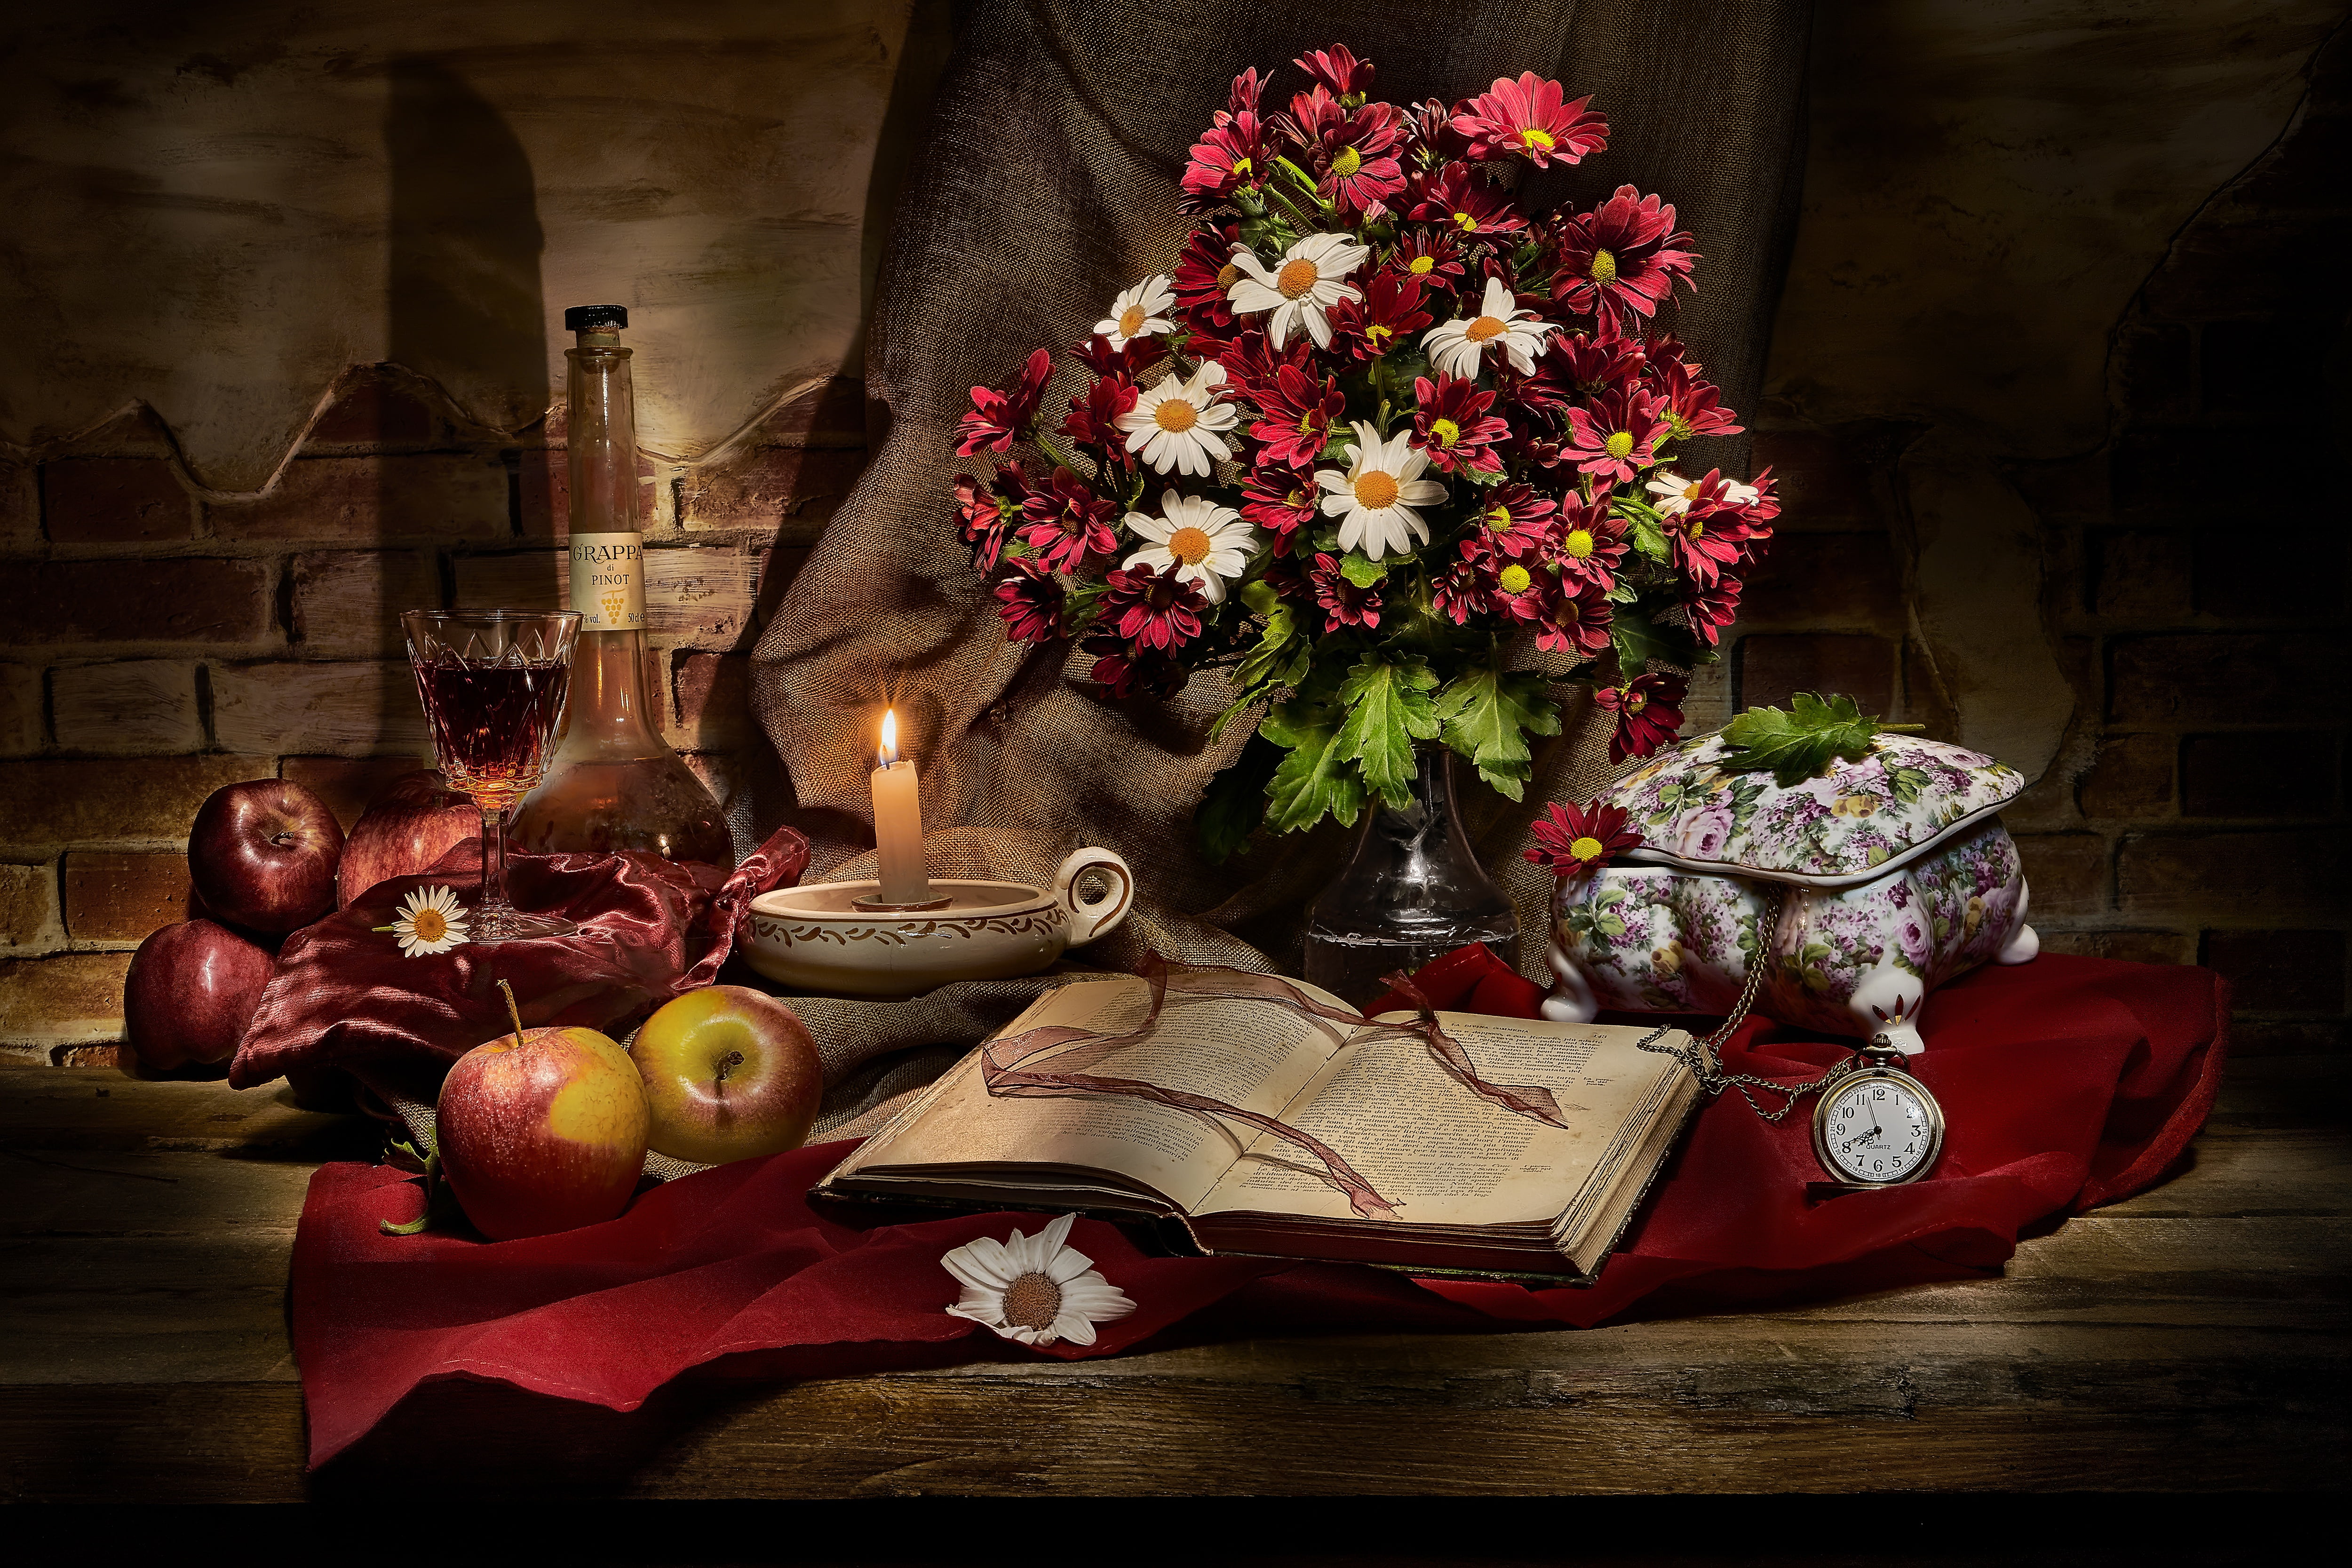 flowers, the dark background, wine, apples, Board, watch, glass